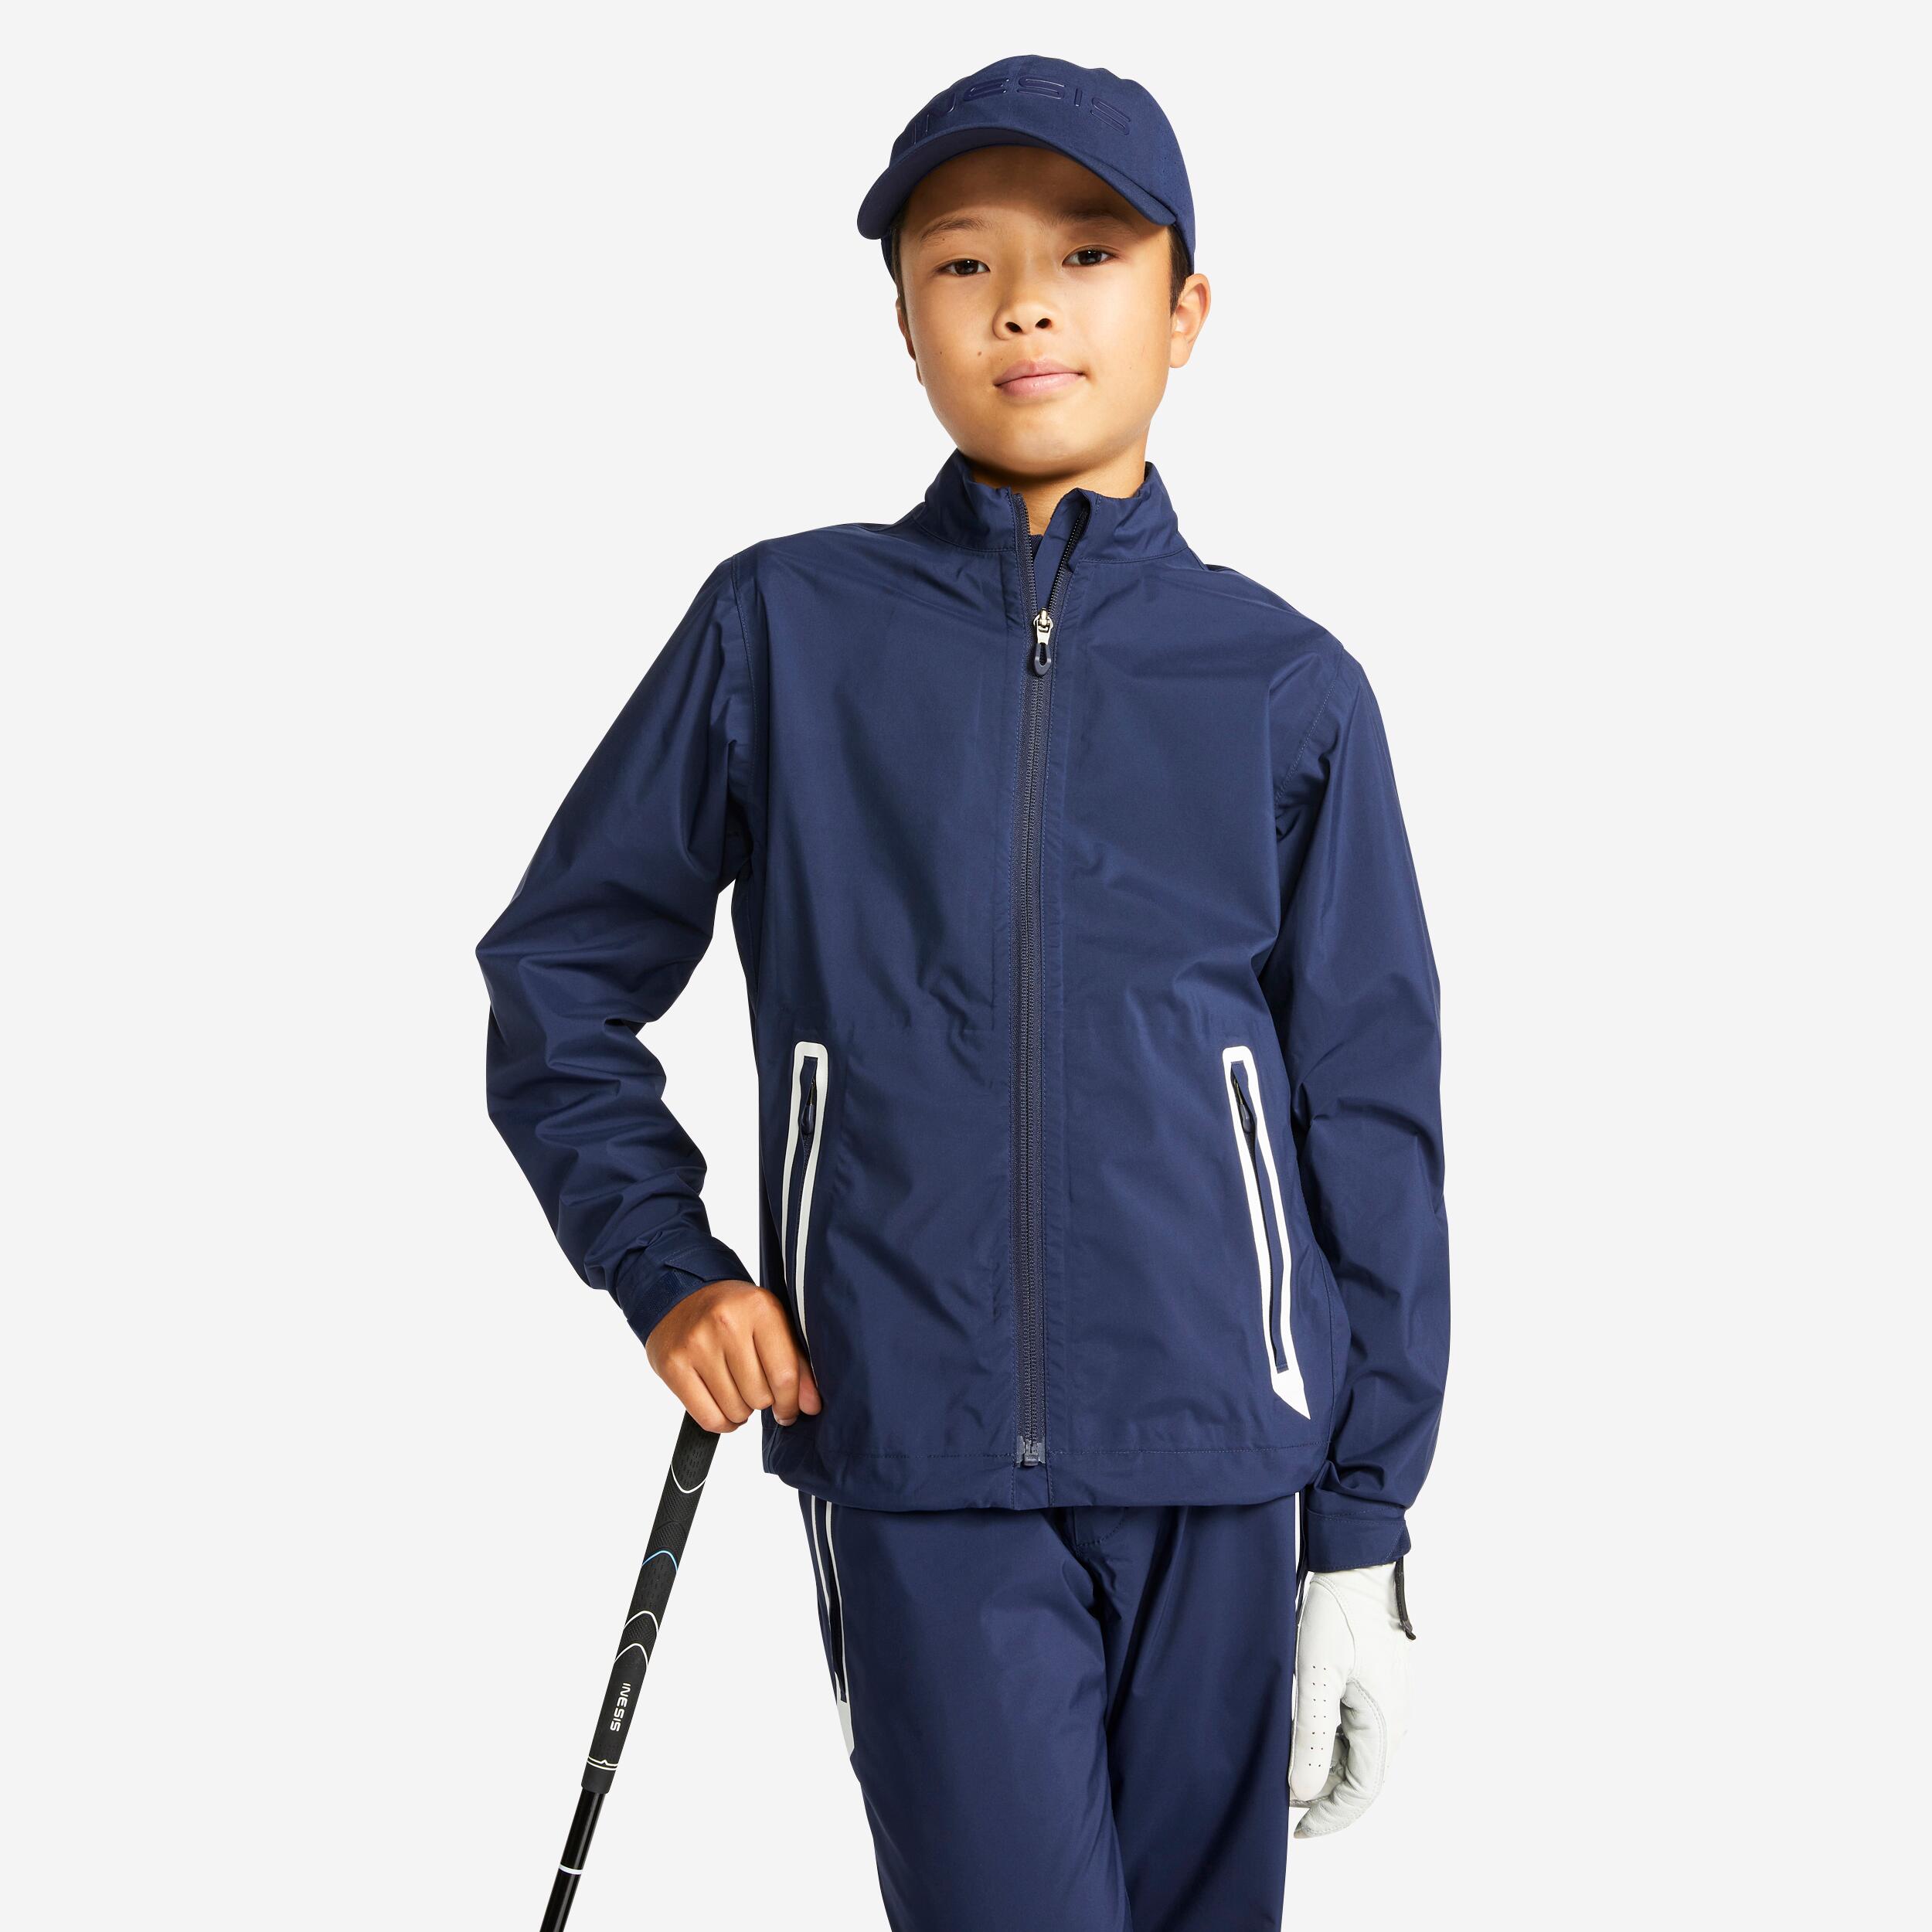 Kids golf waterproof rain jacket RW500 navy blue 1/7